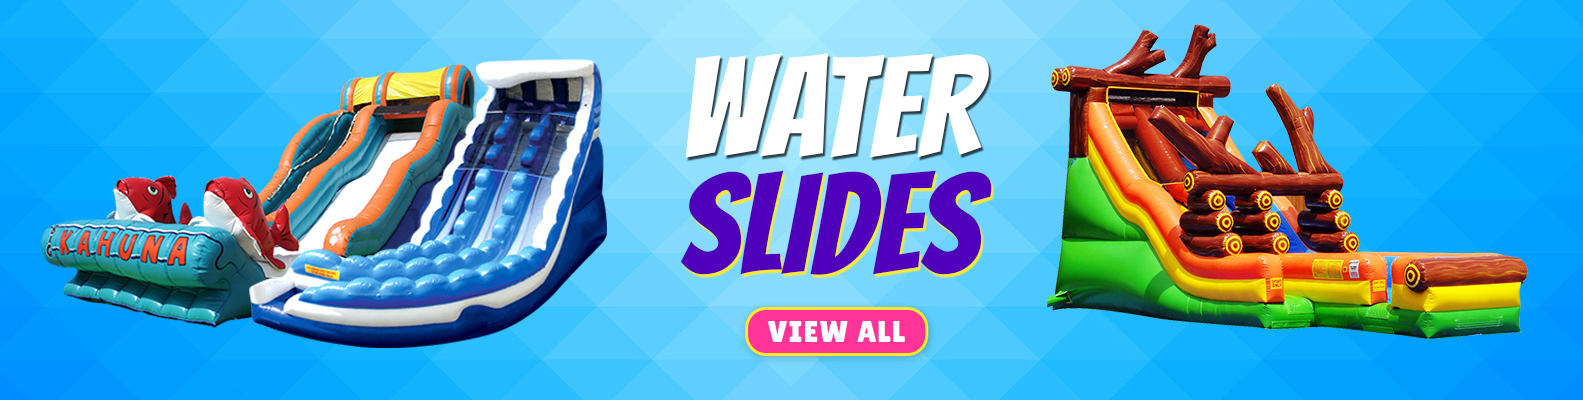 inflatable water slide rentals in Mesa